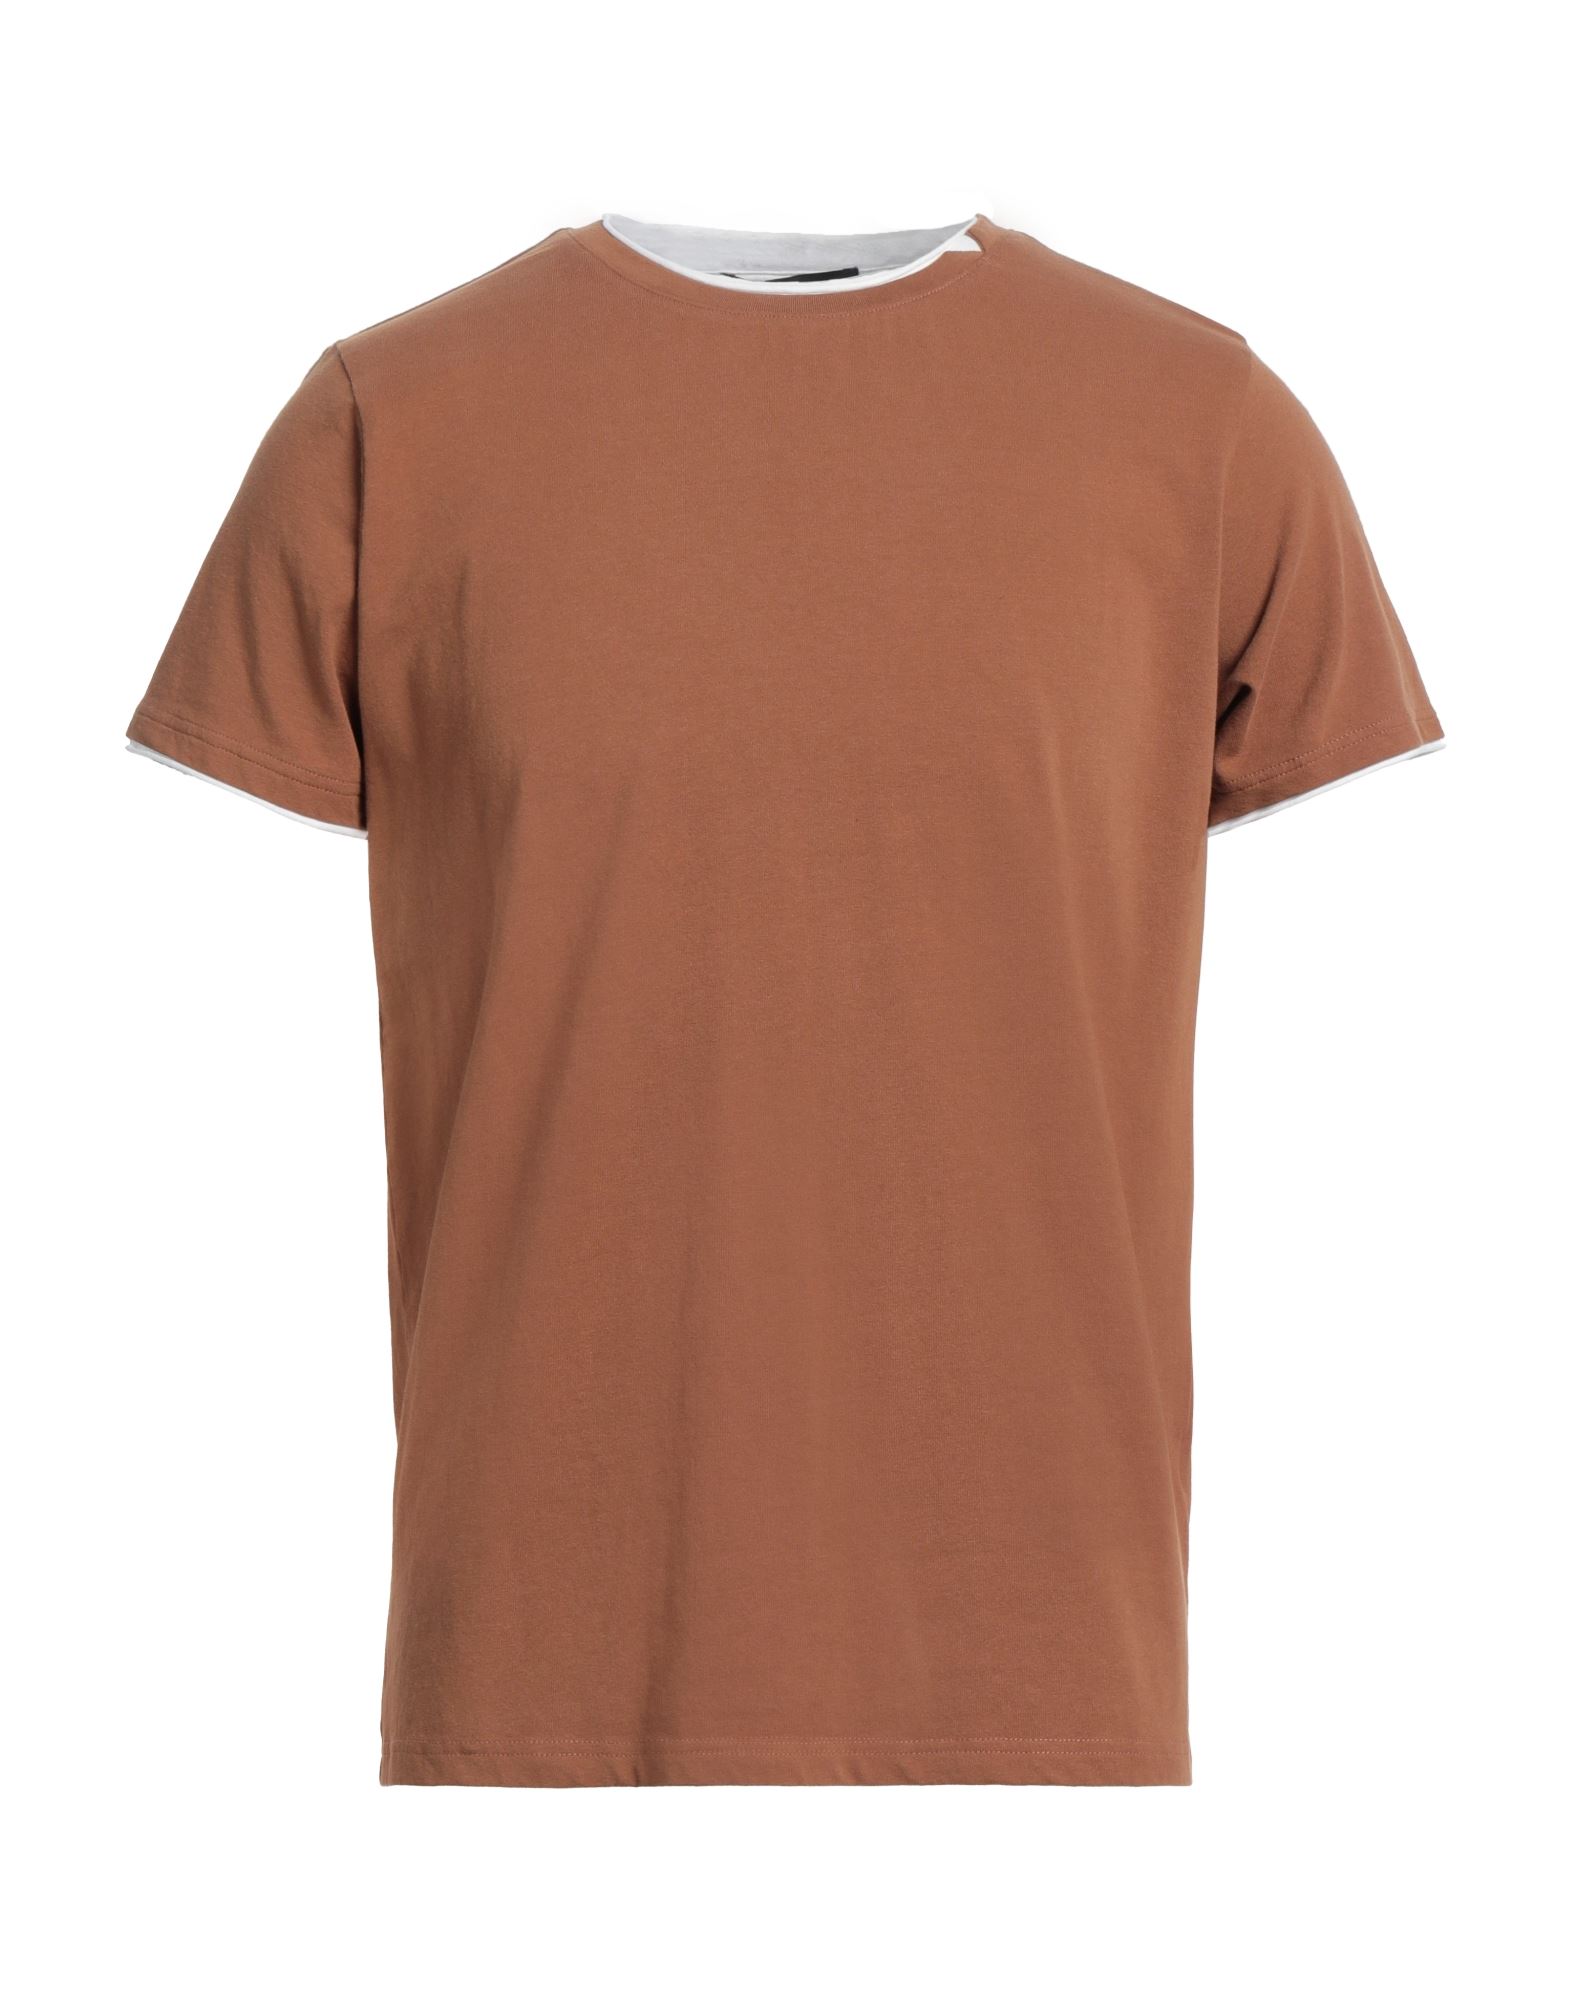 Jeordie's Man T-shirt Brown Size Xl Cotton, Elastane